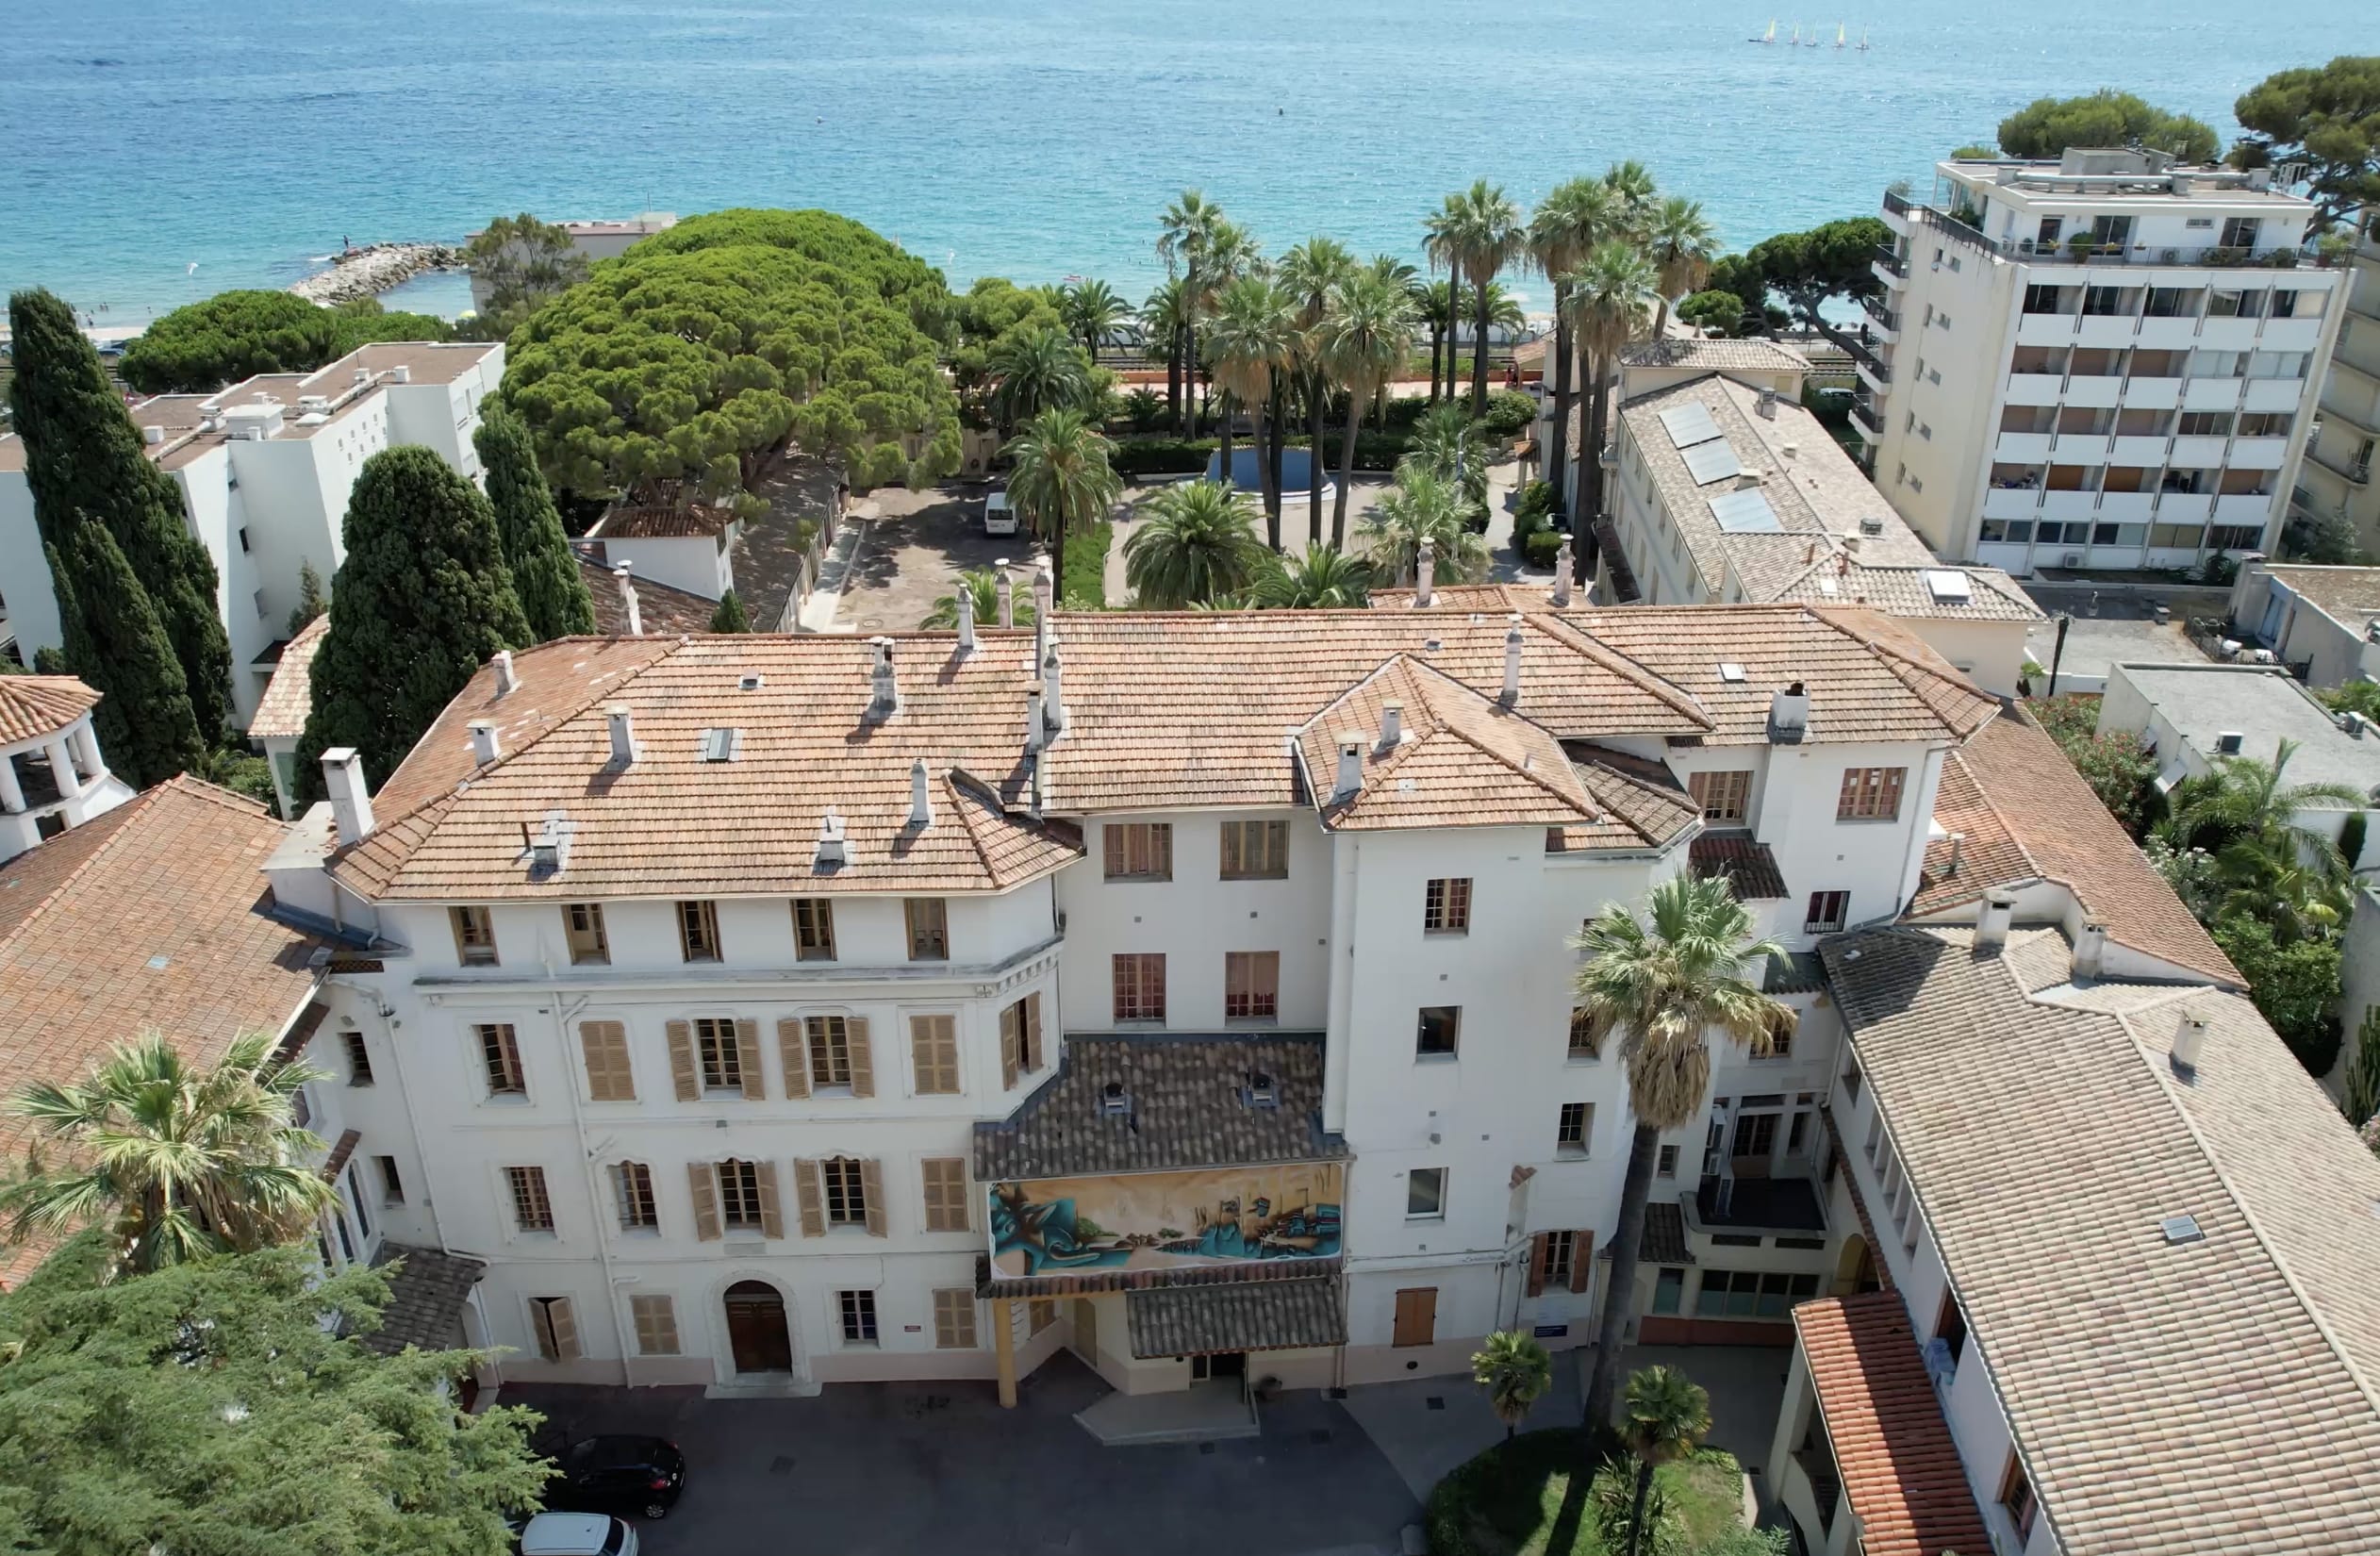 Hostel Santa Maria - Côte d'Azur